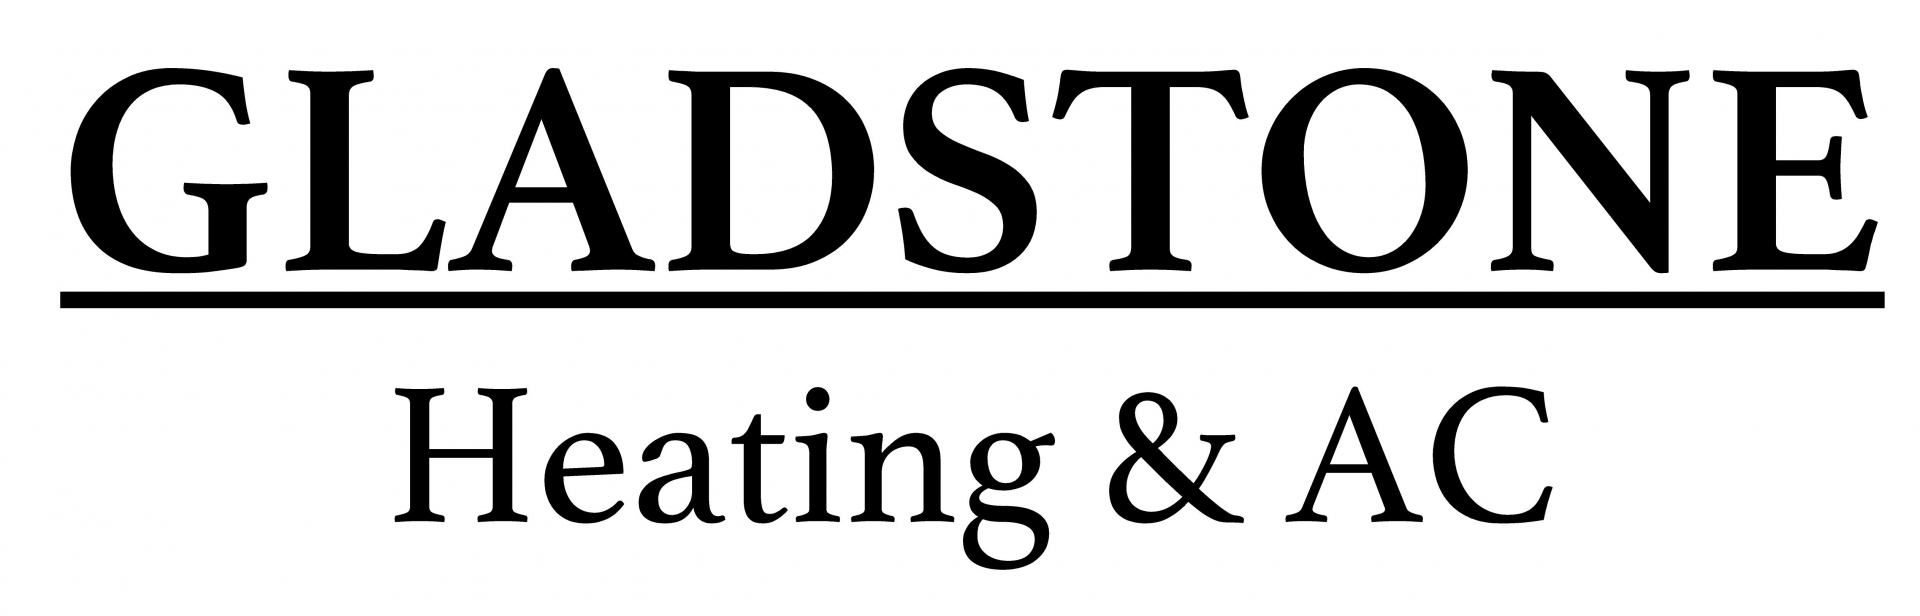 Gladstone Heating & AC company logo